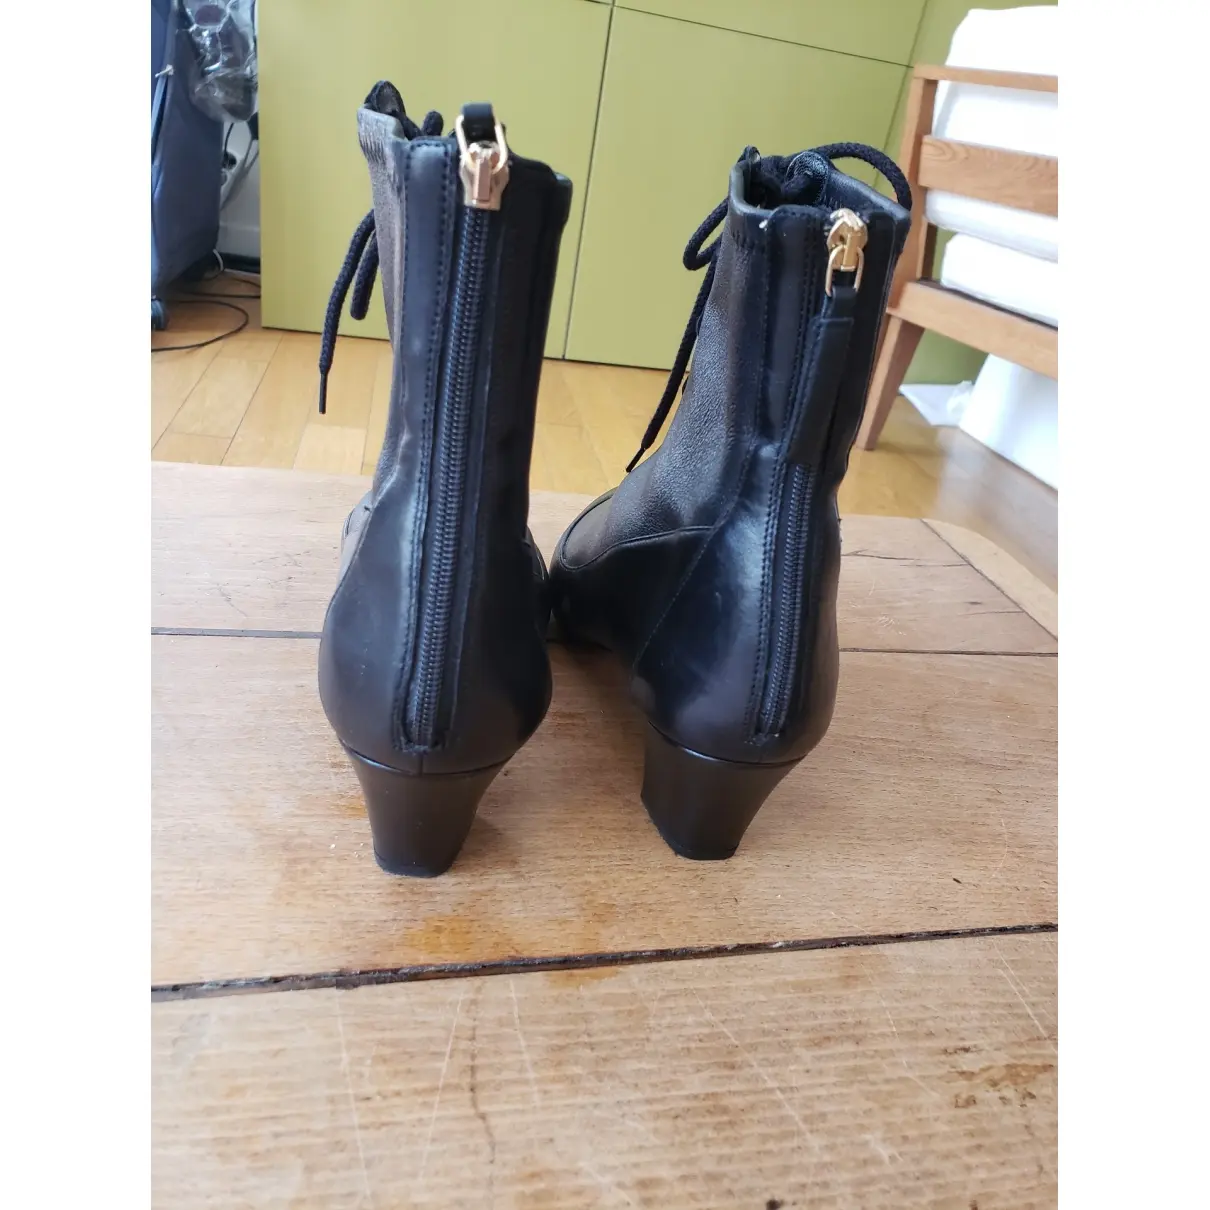 Buy Giorgio Armani Leather boots online